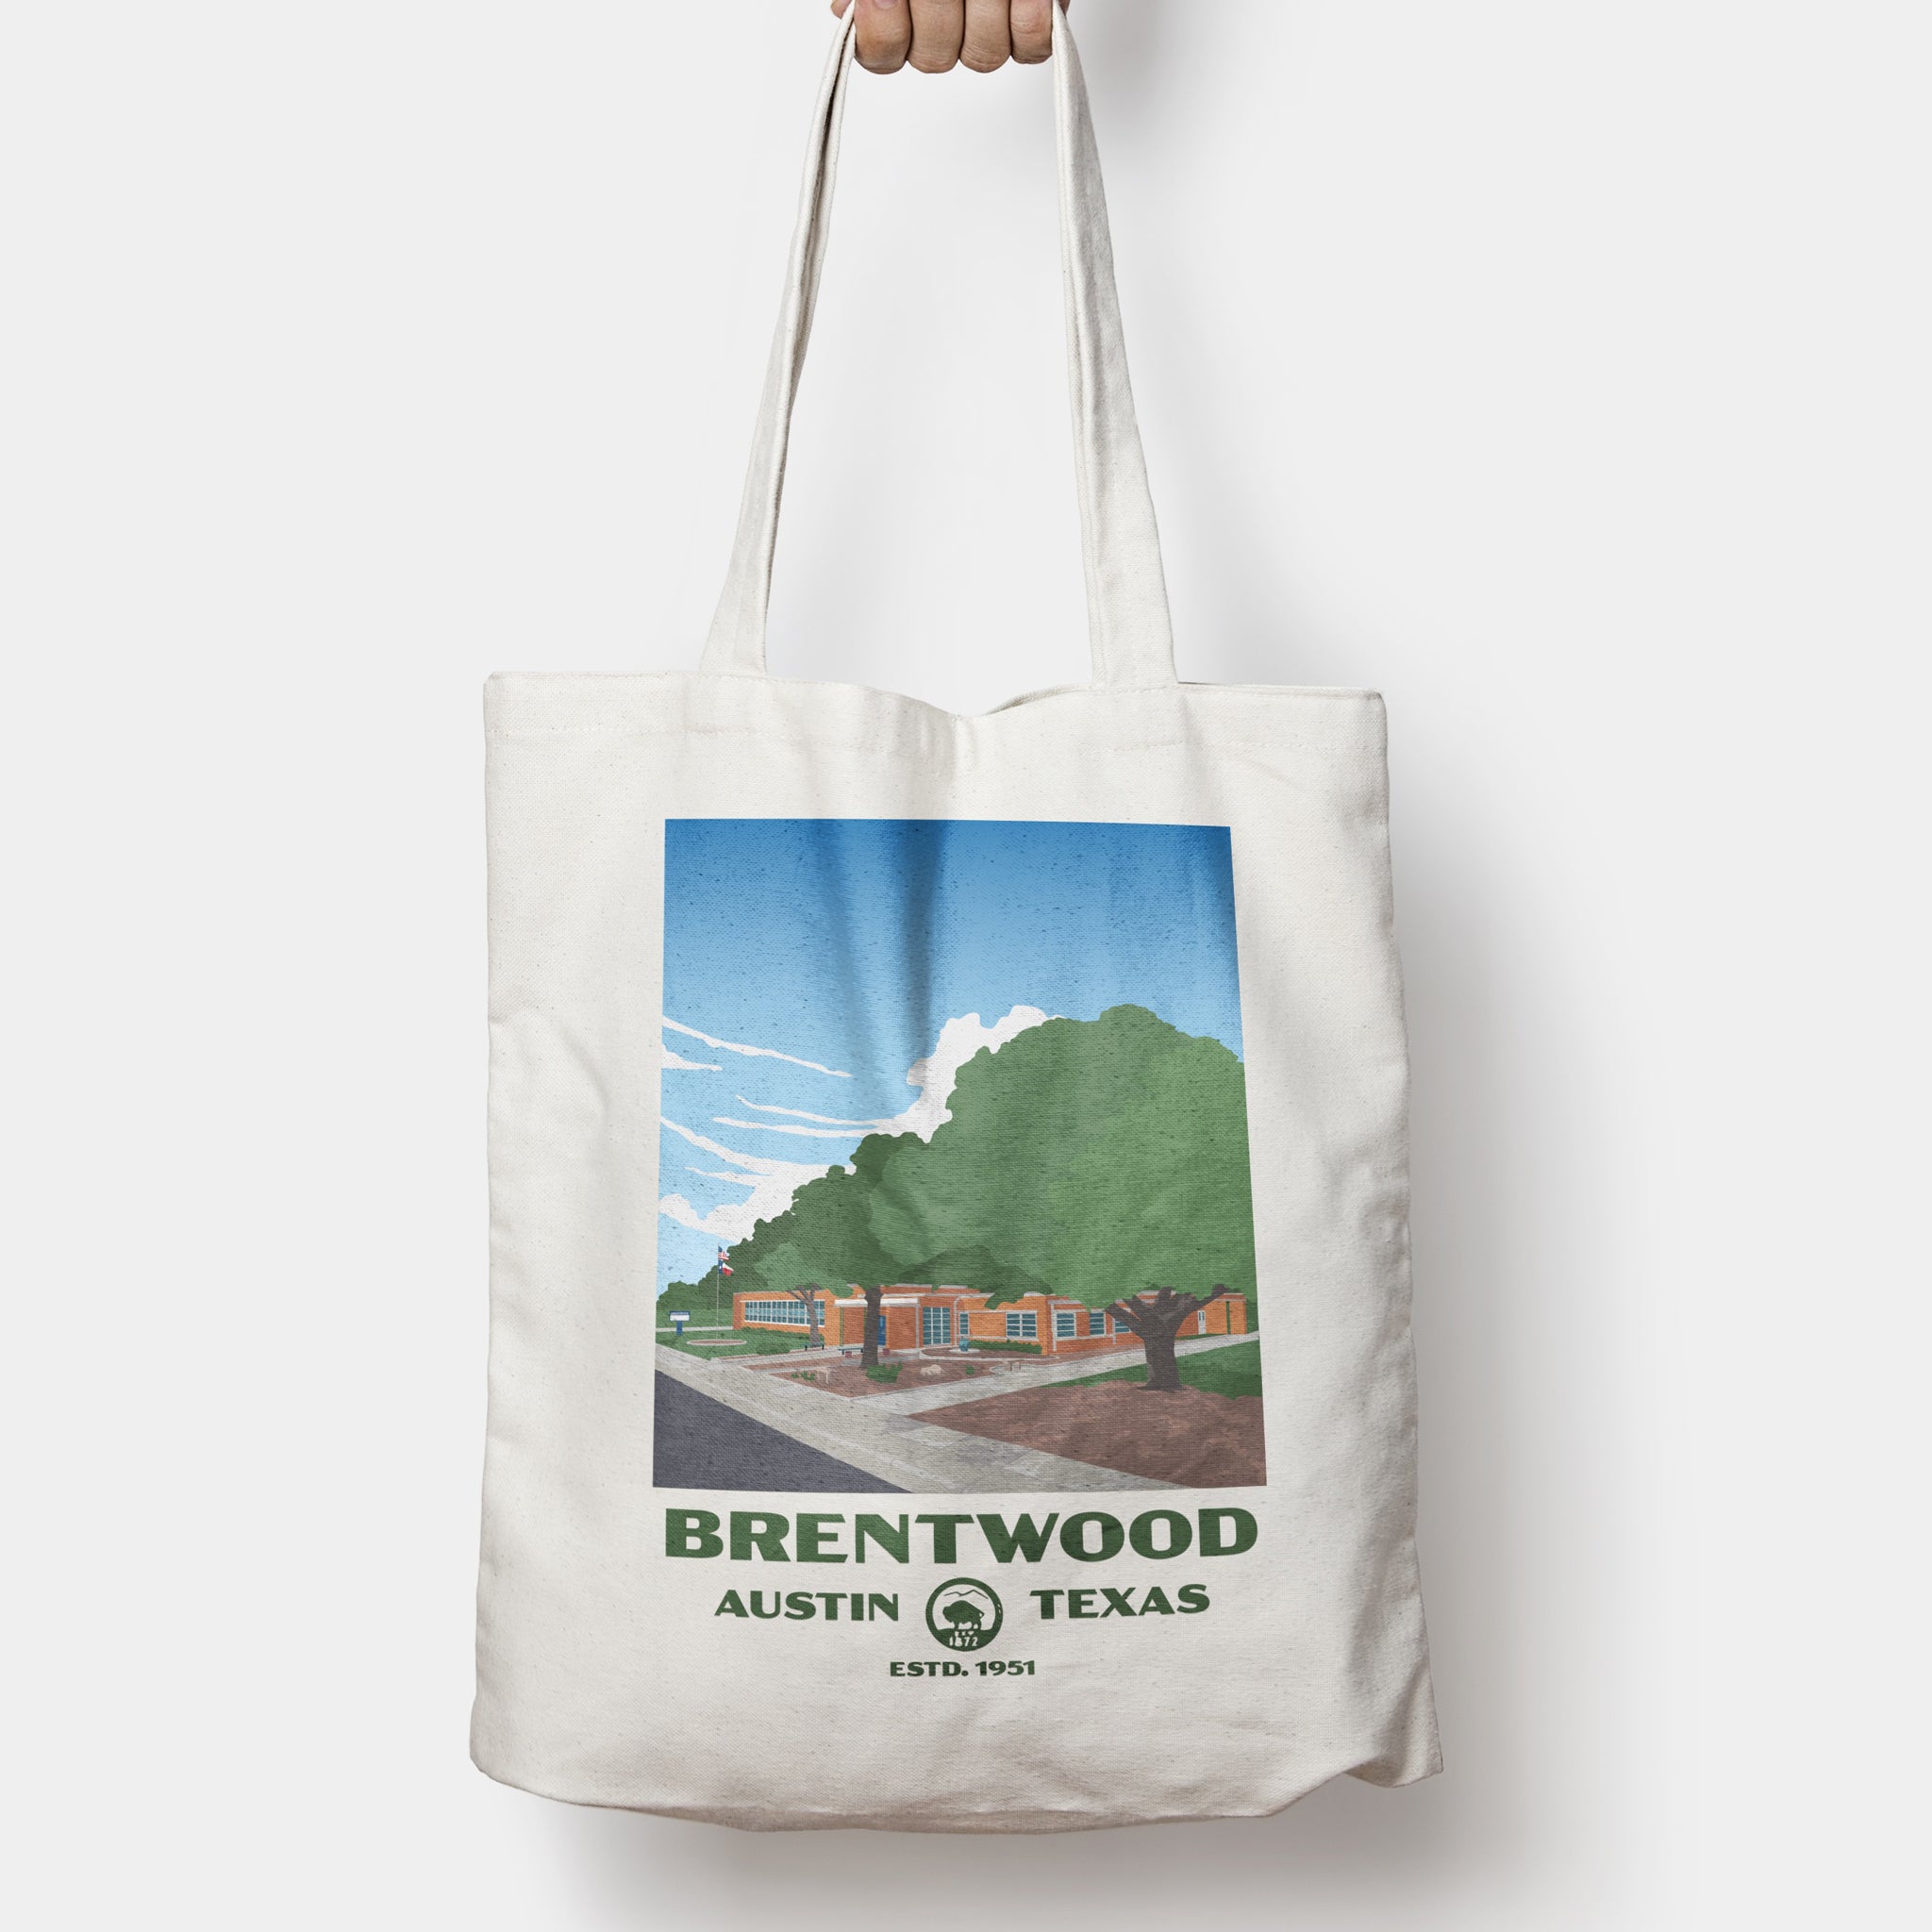 Brentwood Bag